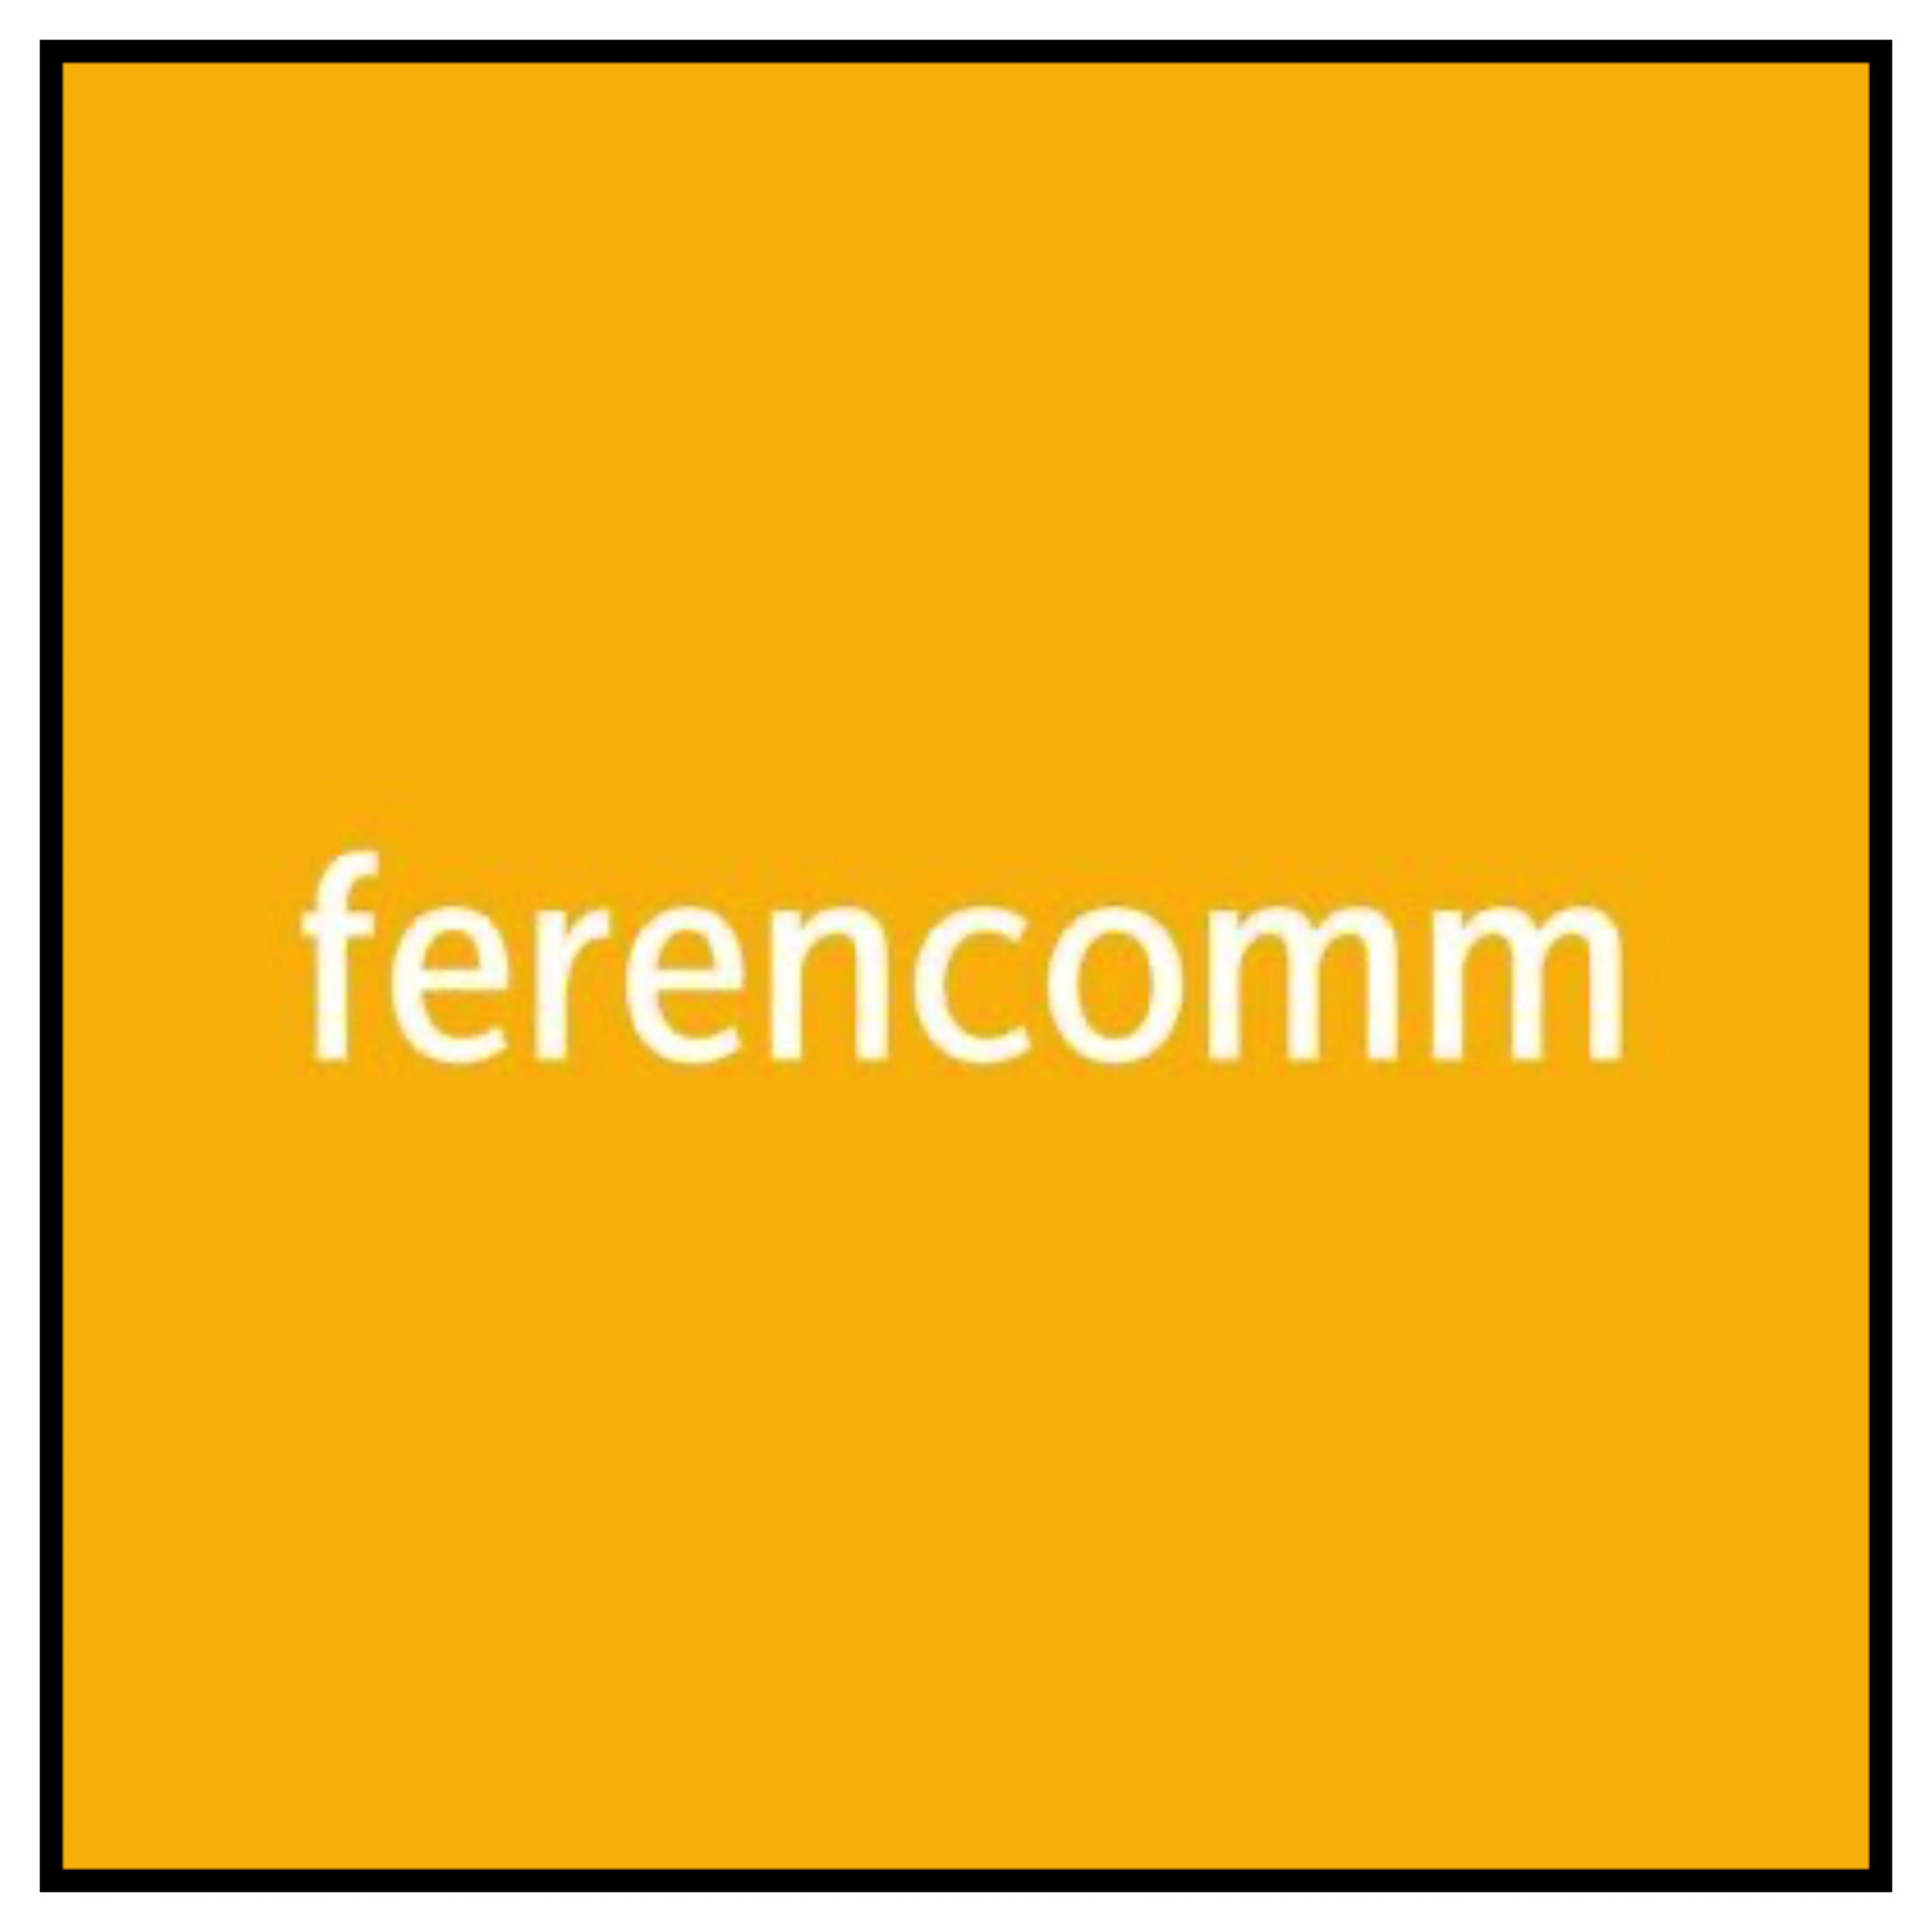 Ferencomm Logo.png